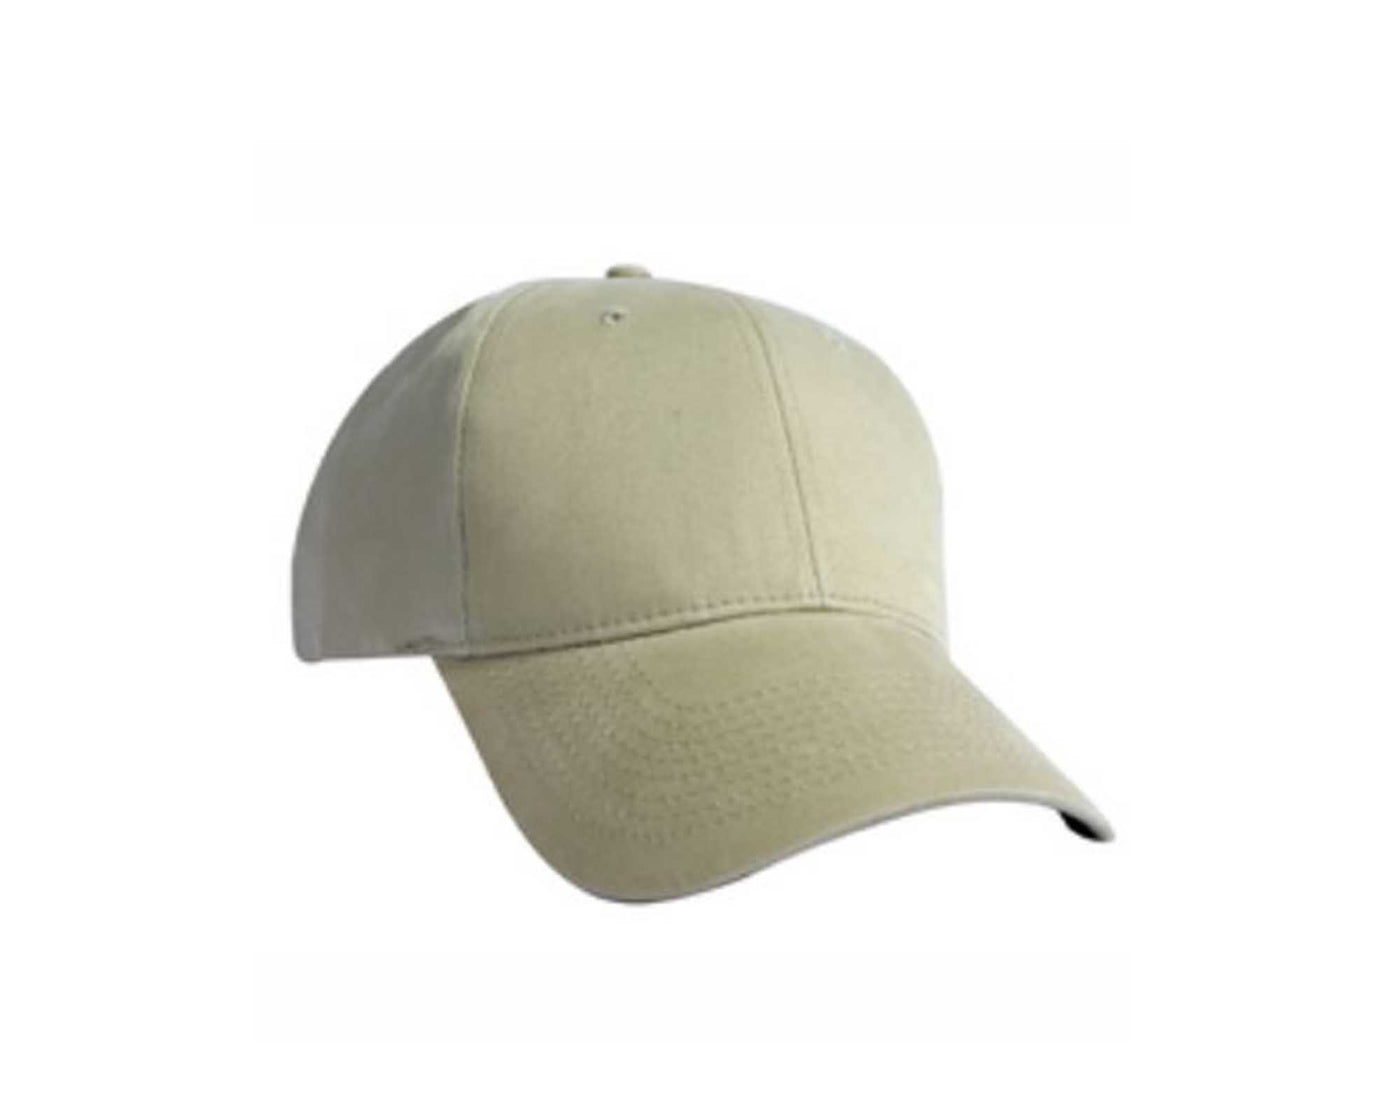 Tan baseball cap on a white background